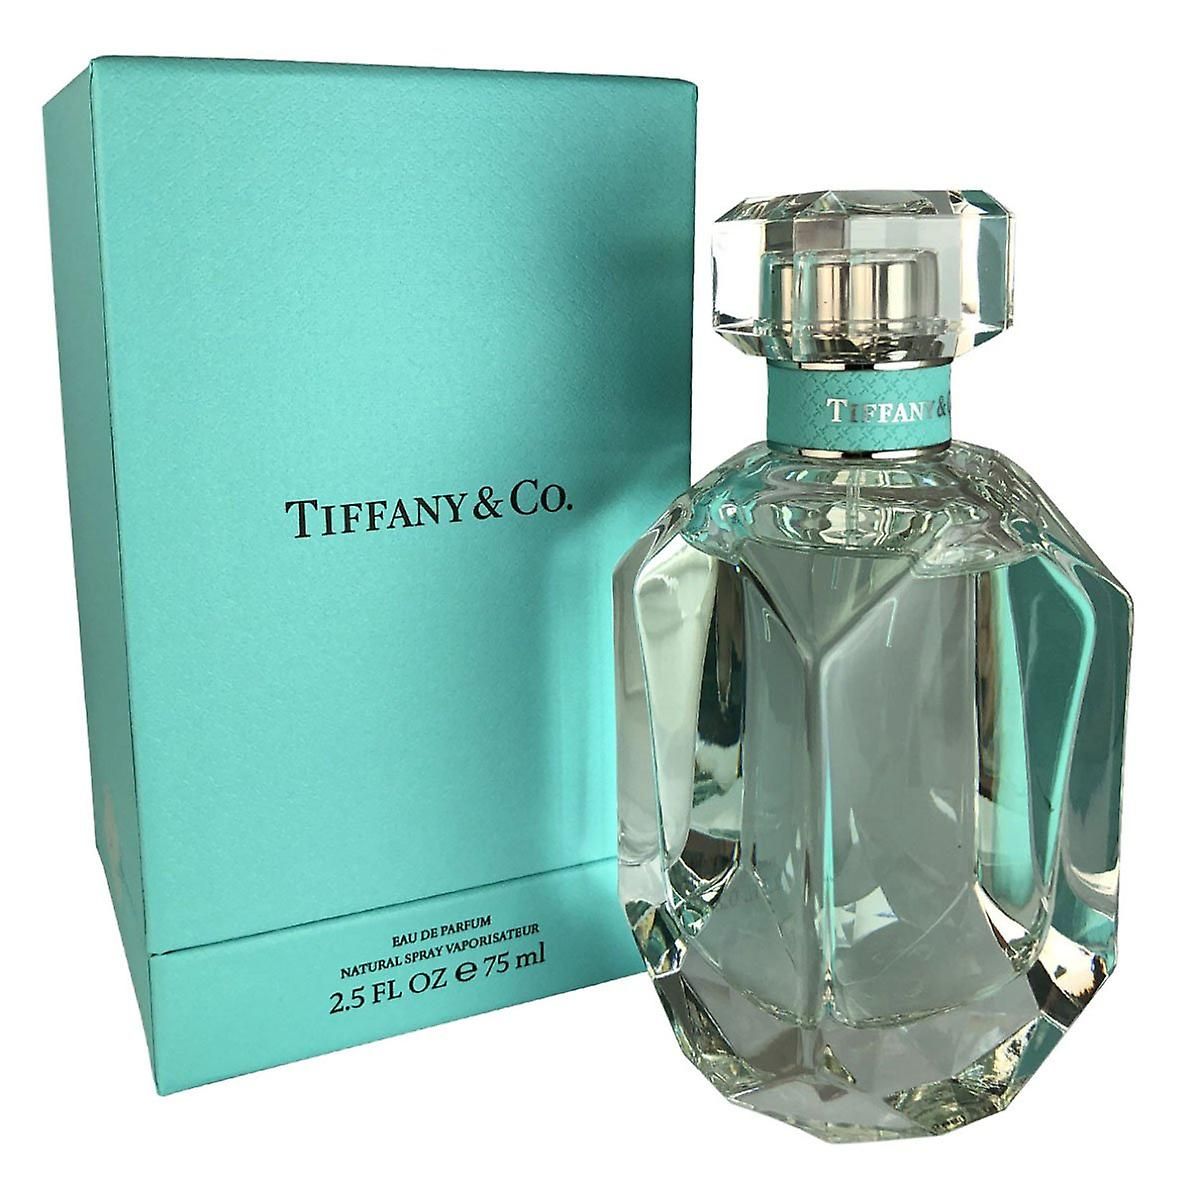 Ганимед парфюм летуаль. Тиффани духи. Tiffany & co , EDP., 100 ml. Тиффани энд гоу духи. Тиффани духи женские летуаль.